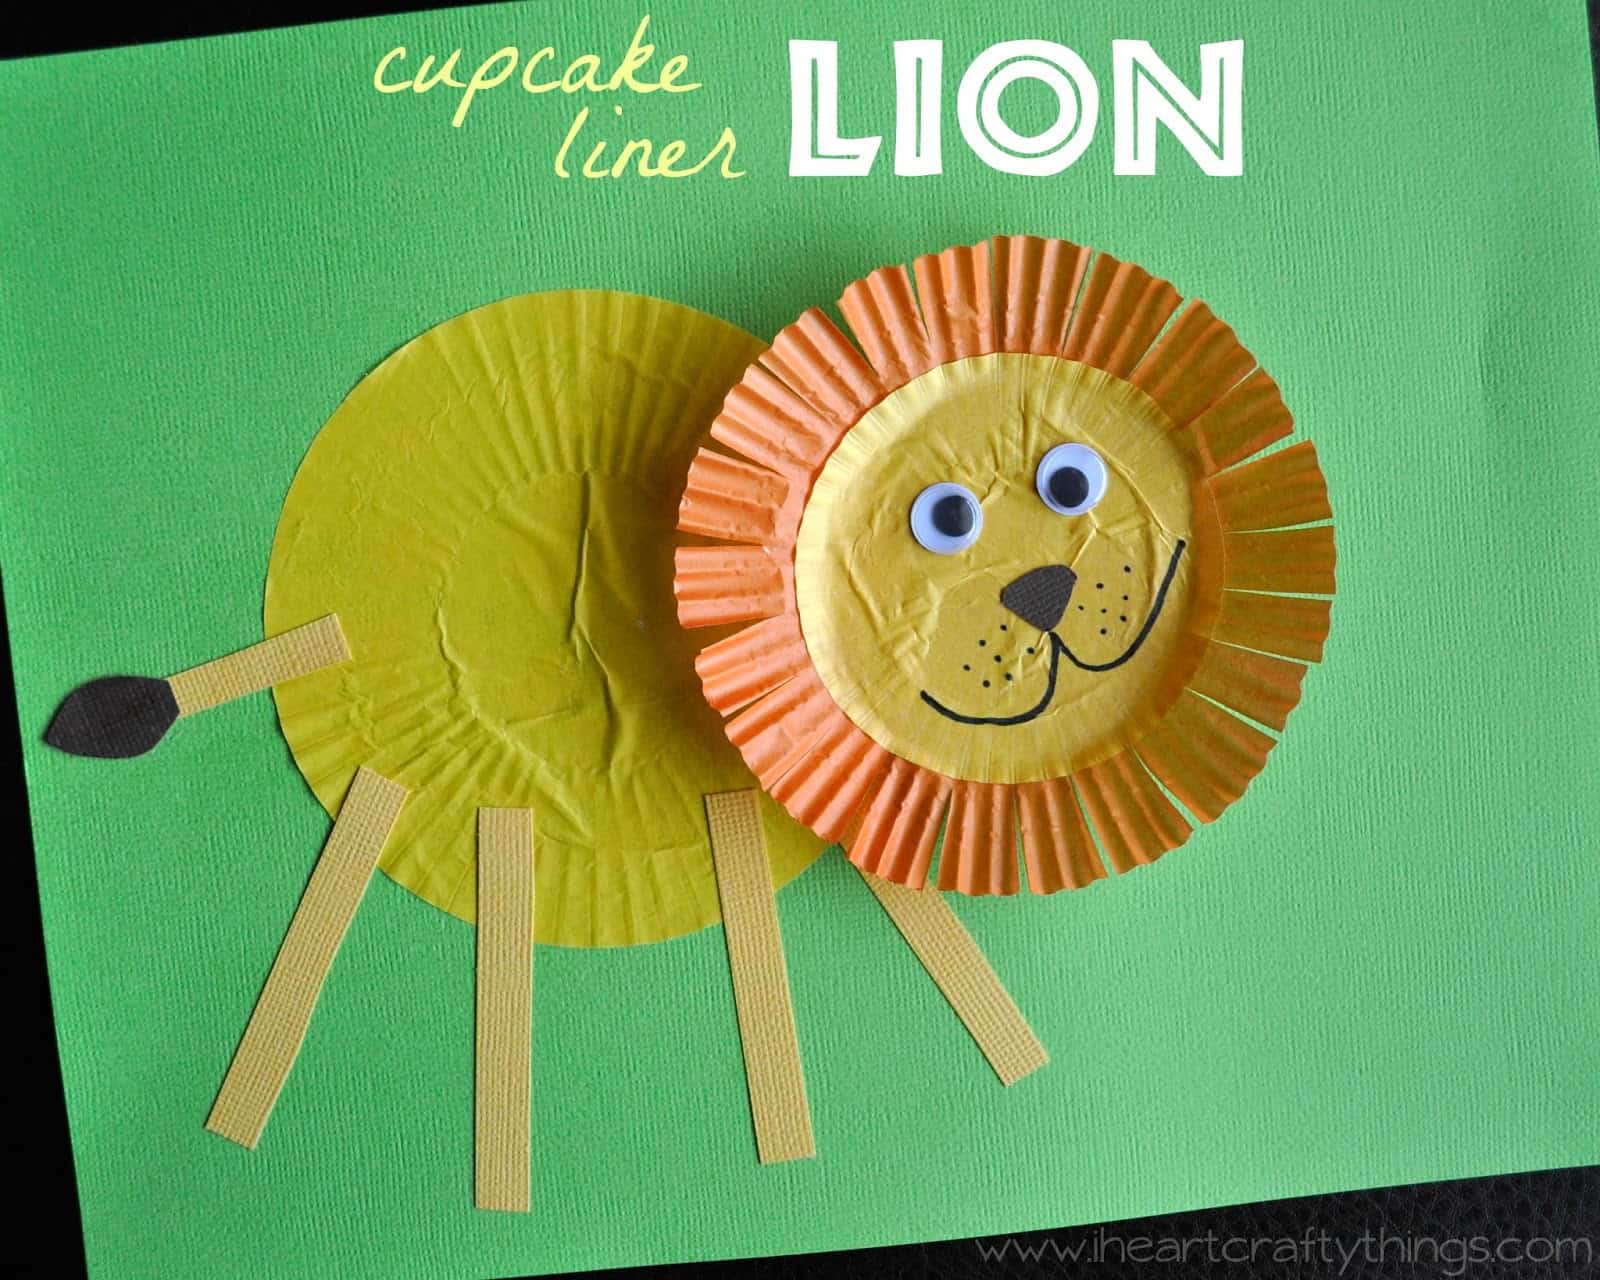 Cupcake liner lion